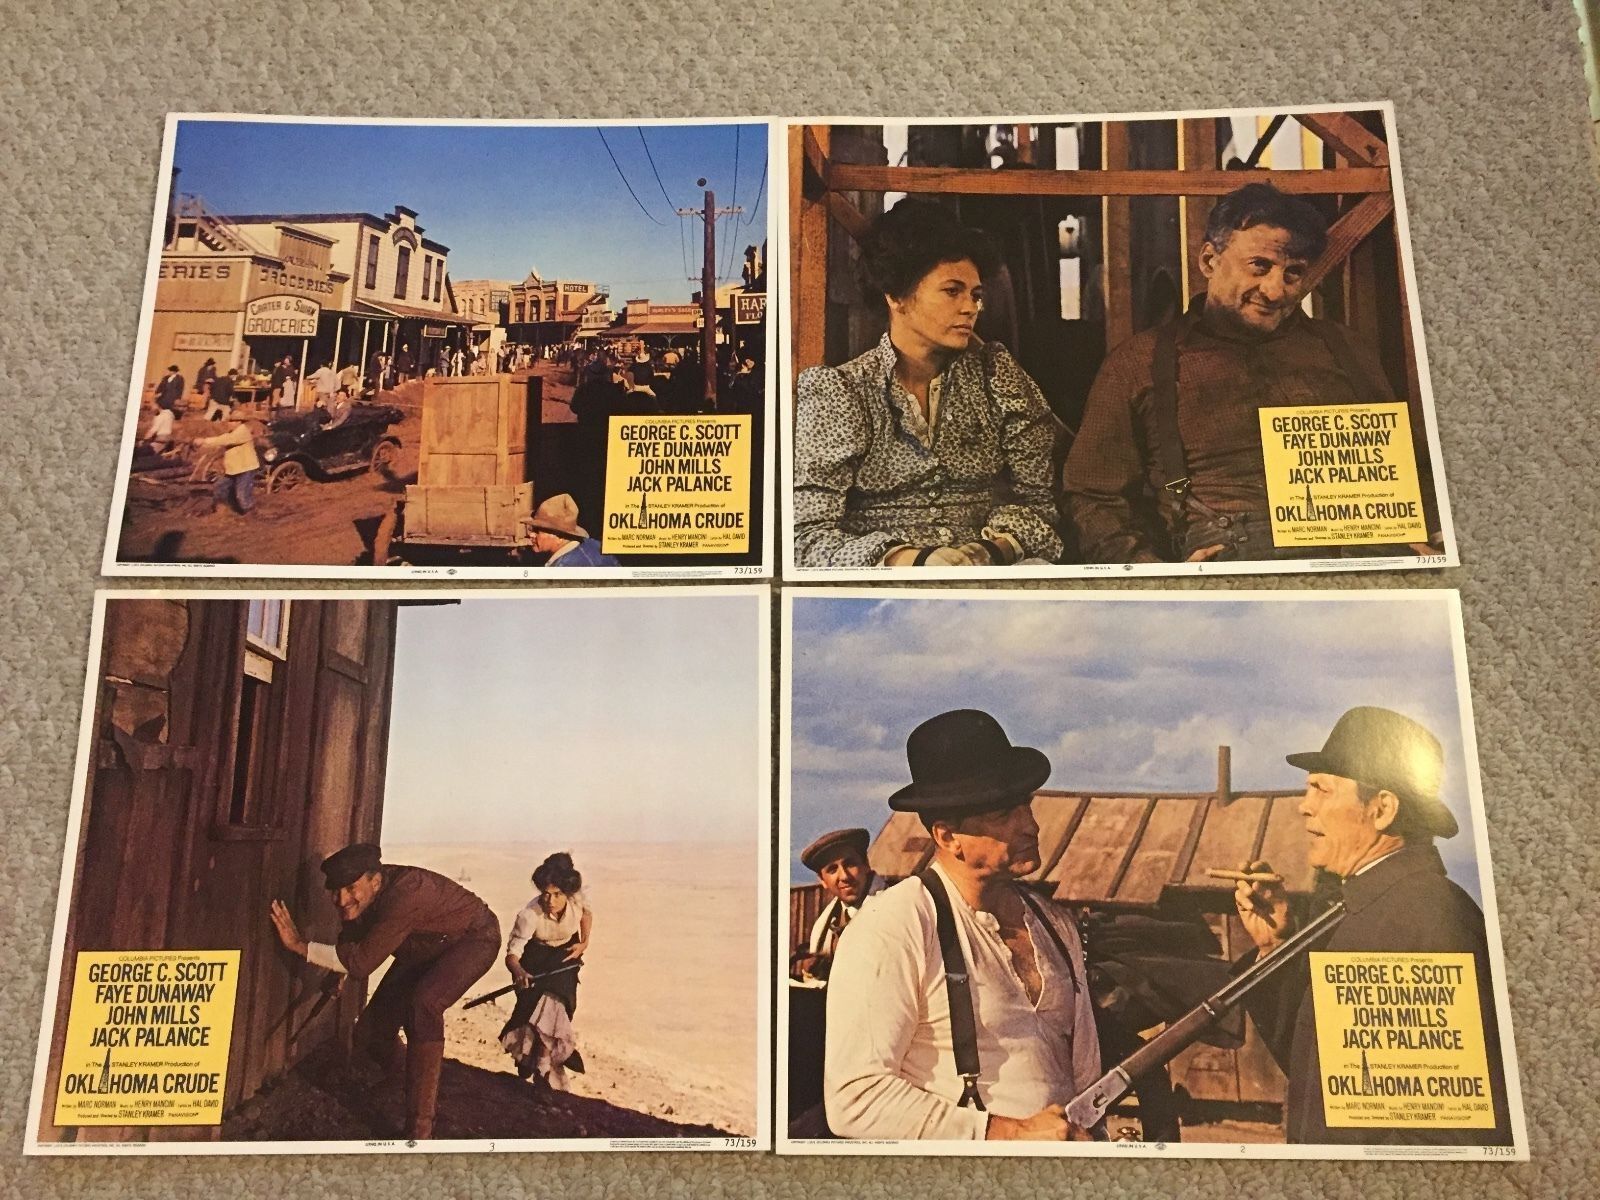 1973 Lot 4 Oklahoma Crude Movie Press Photo Lobby Cards 11x14 George C Scott